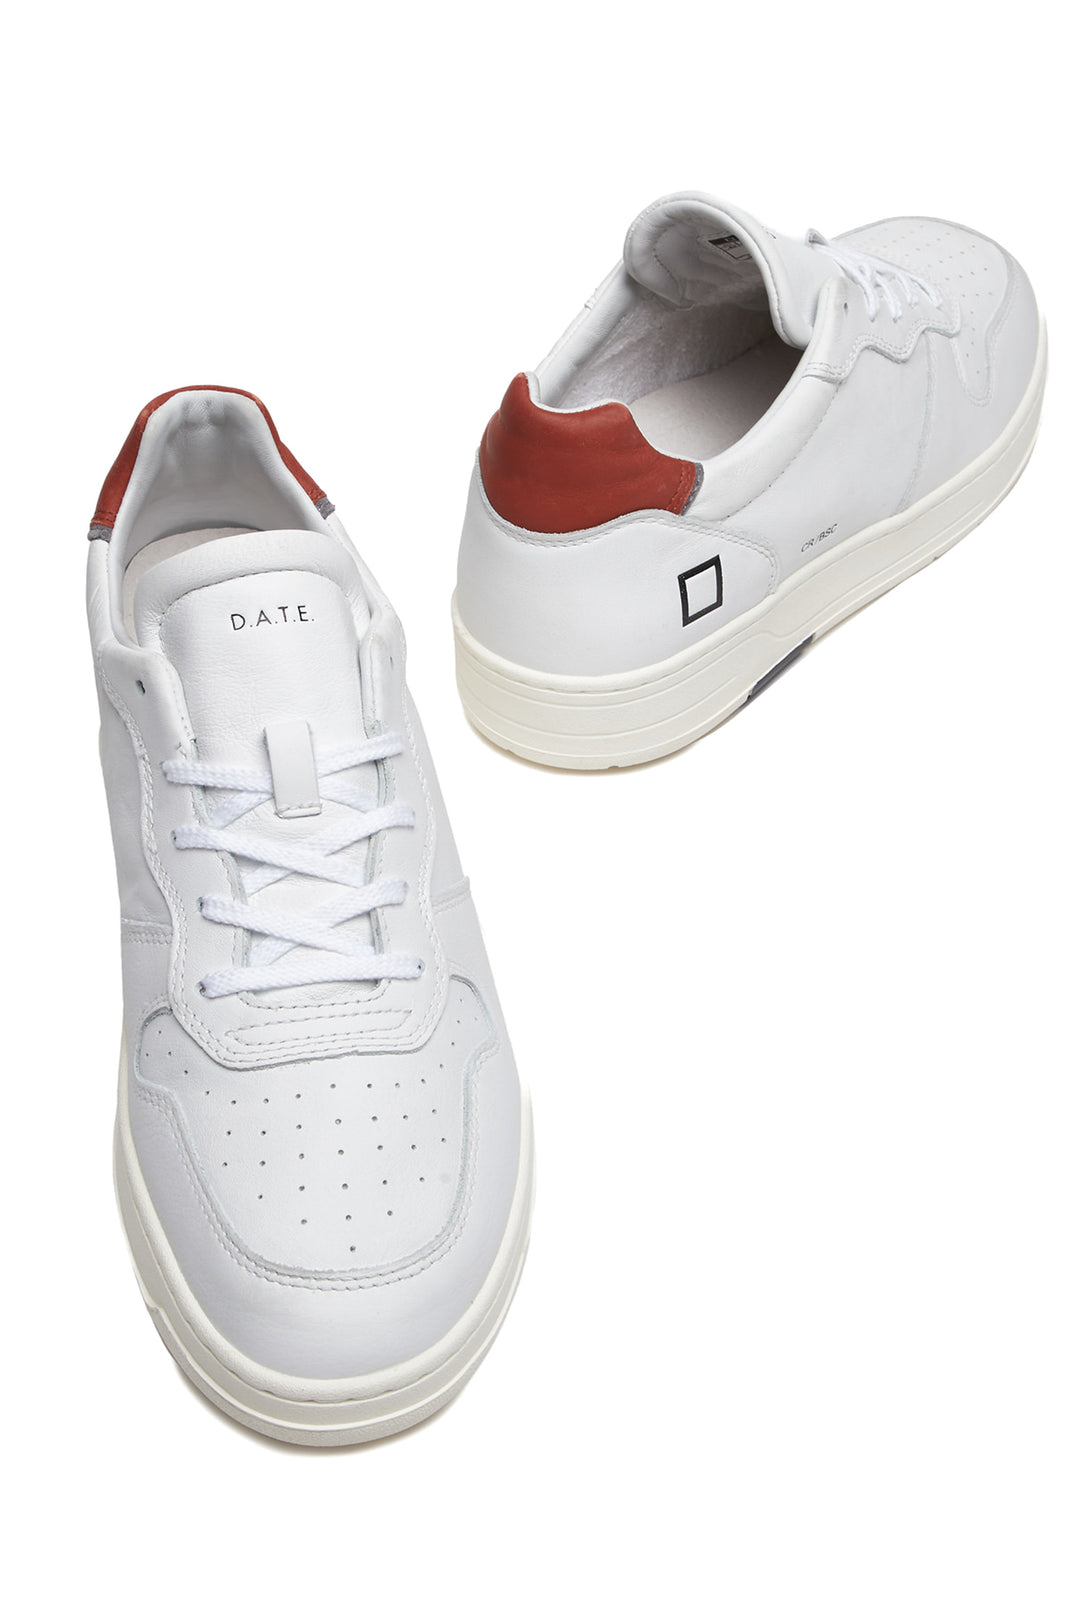 DATE Sneaker Court Basic White-Brick - Mancinelli 1954